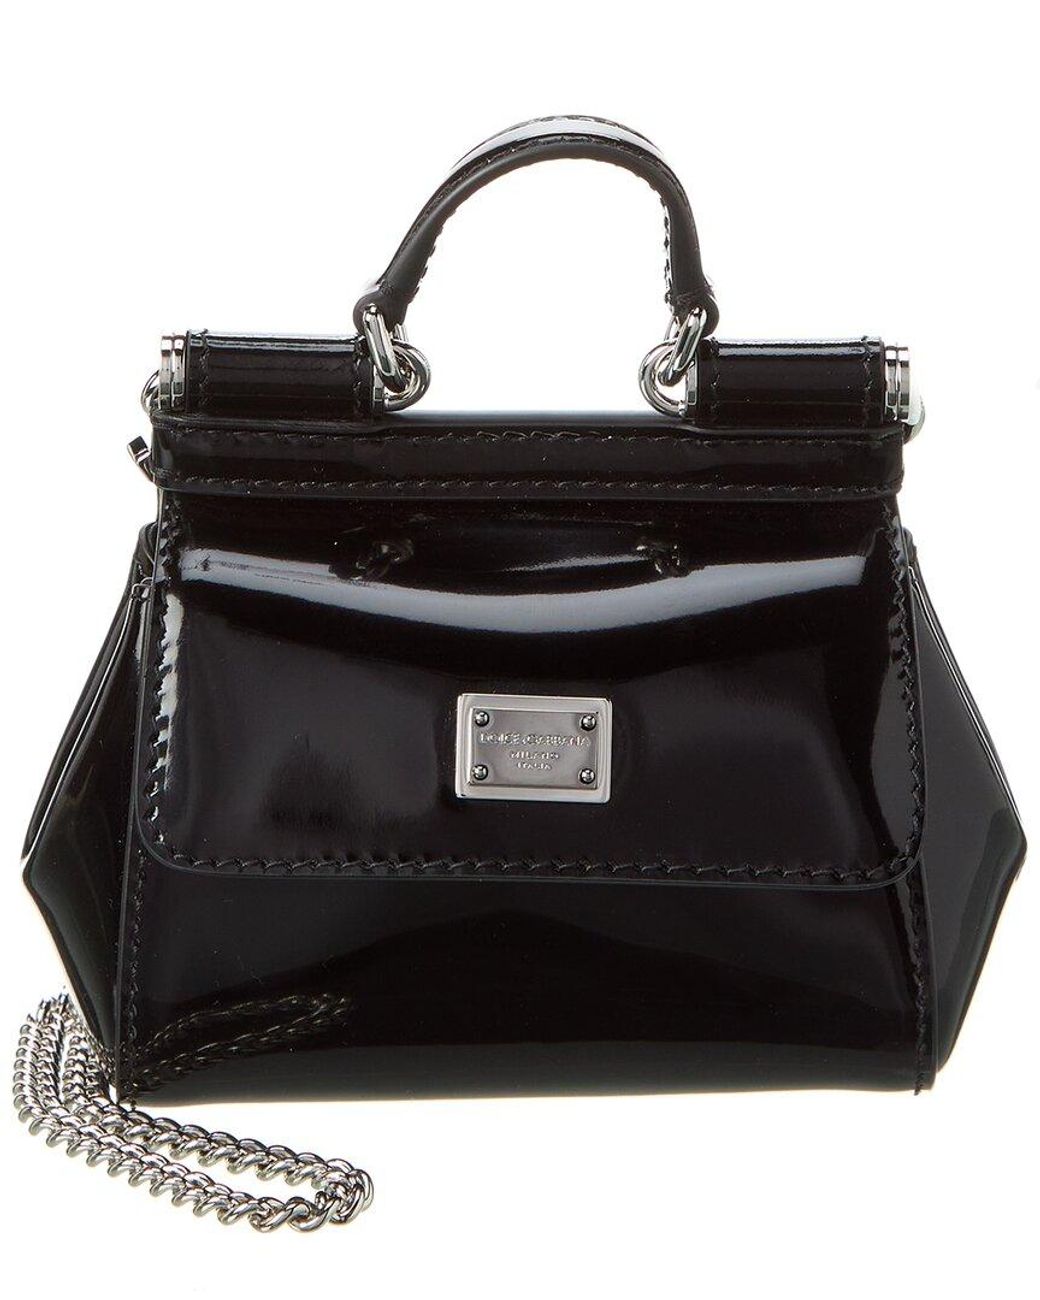 Dolce & Gabbana Kim Sicily Micro Leather Shoulder Bag in Black | Lyst